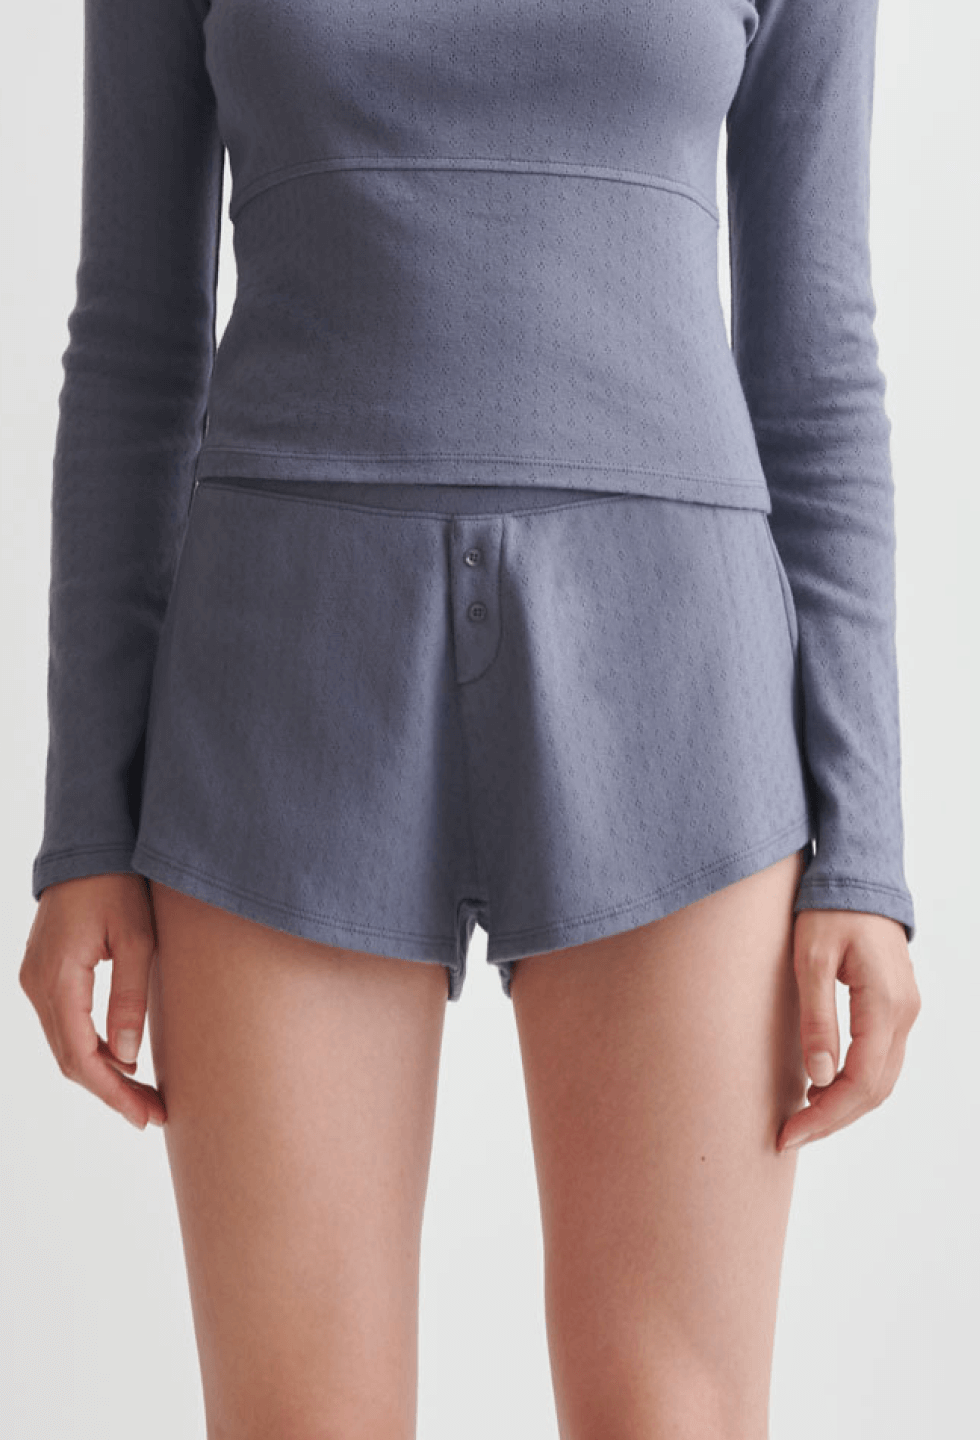 PAIYIGE - Sport Set: Short-Sleeve T-Shirt + Yoga Pants + Bra Top + Shorts